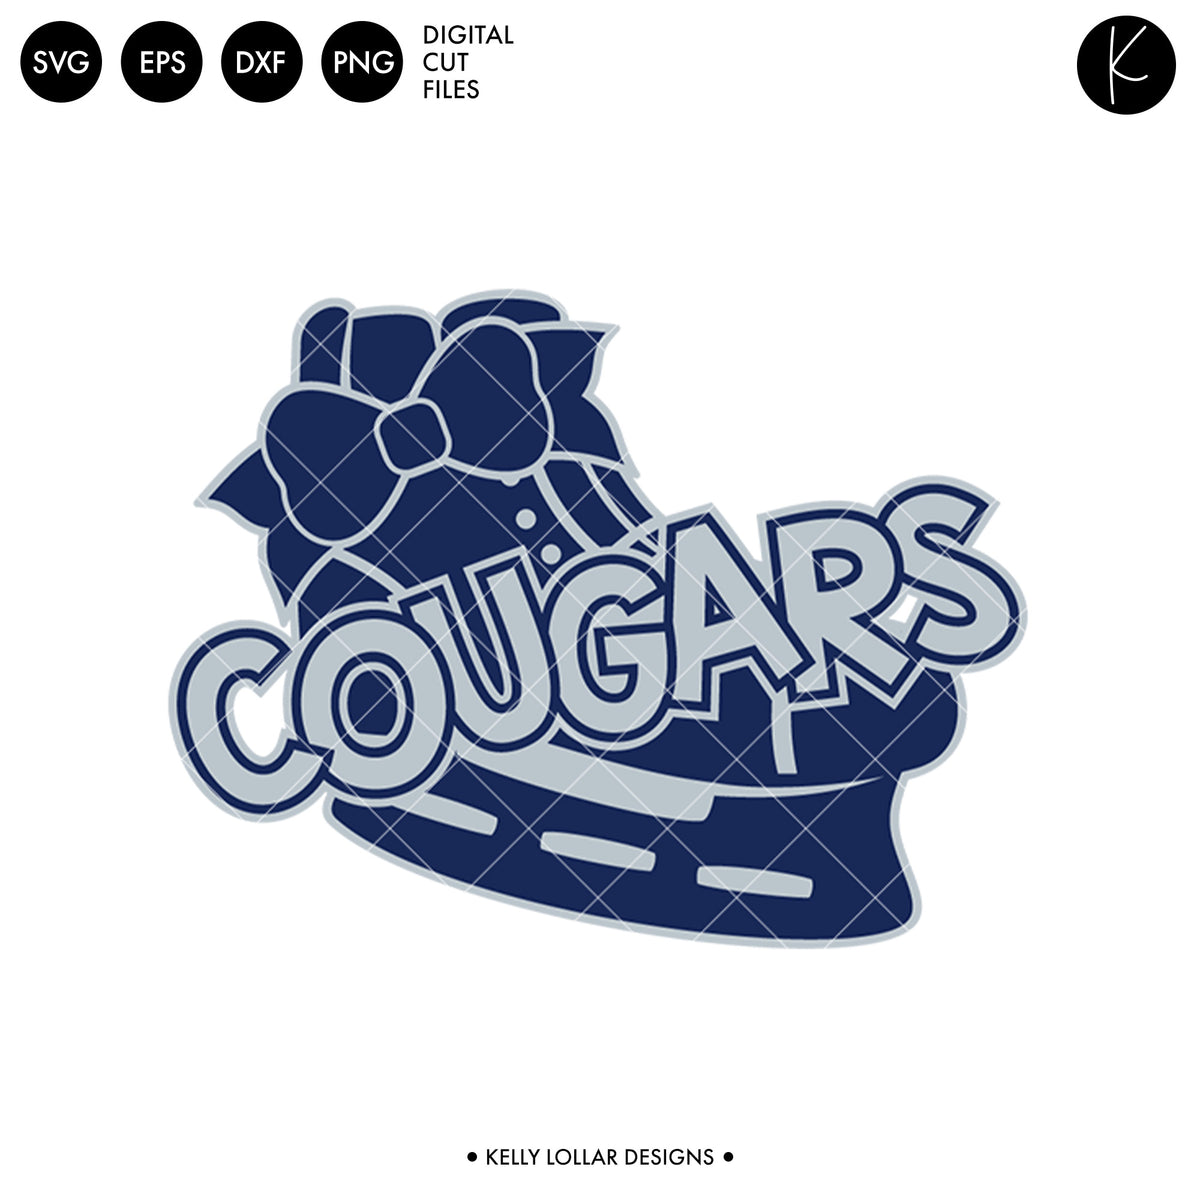 Cougars Hockey Bundle | SVG DXF EPS PNG Cut Files